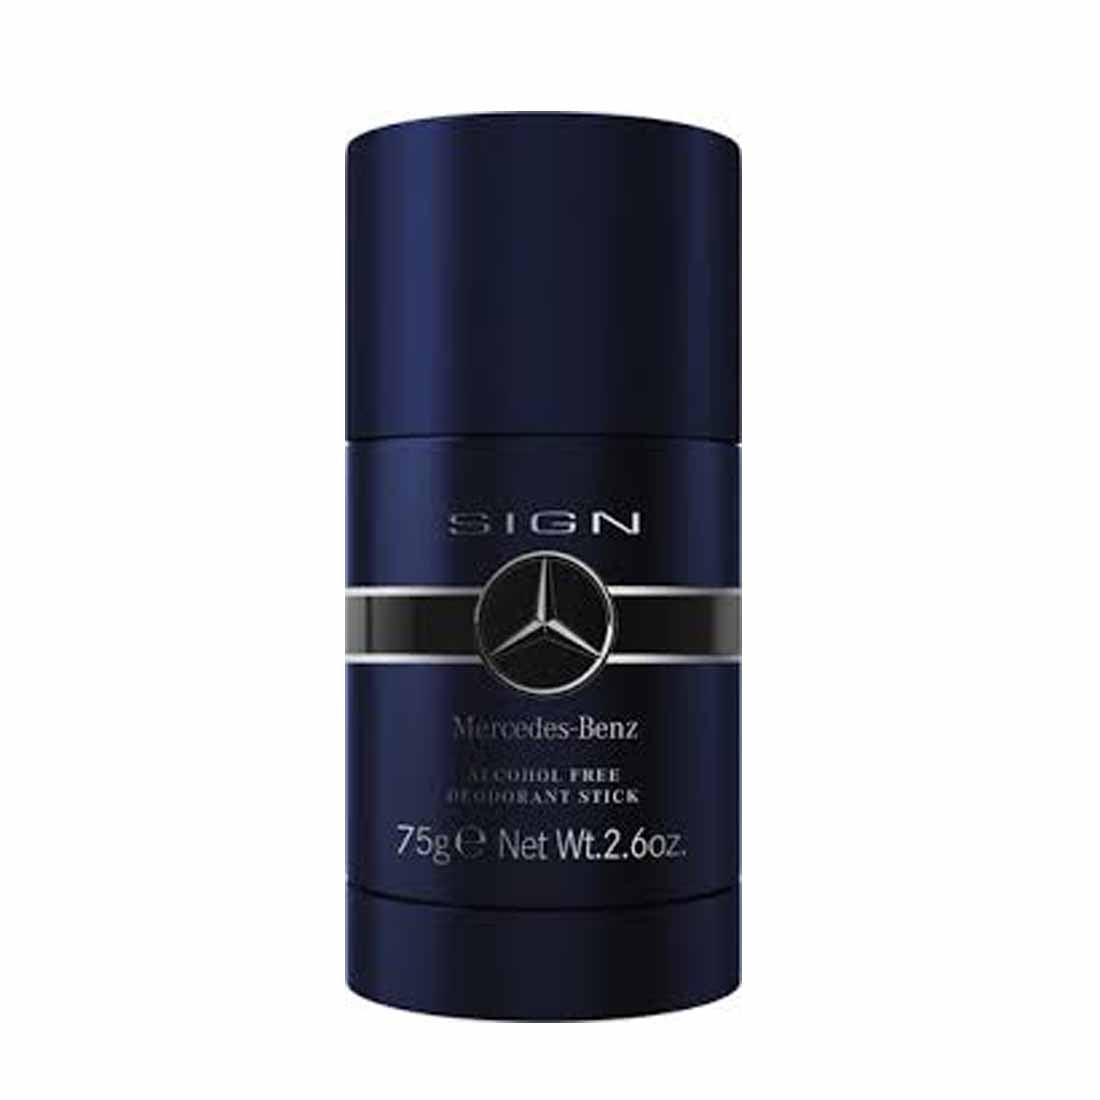 Mercedes Benz Sign Deodorant Stick For Men - 75g